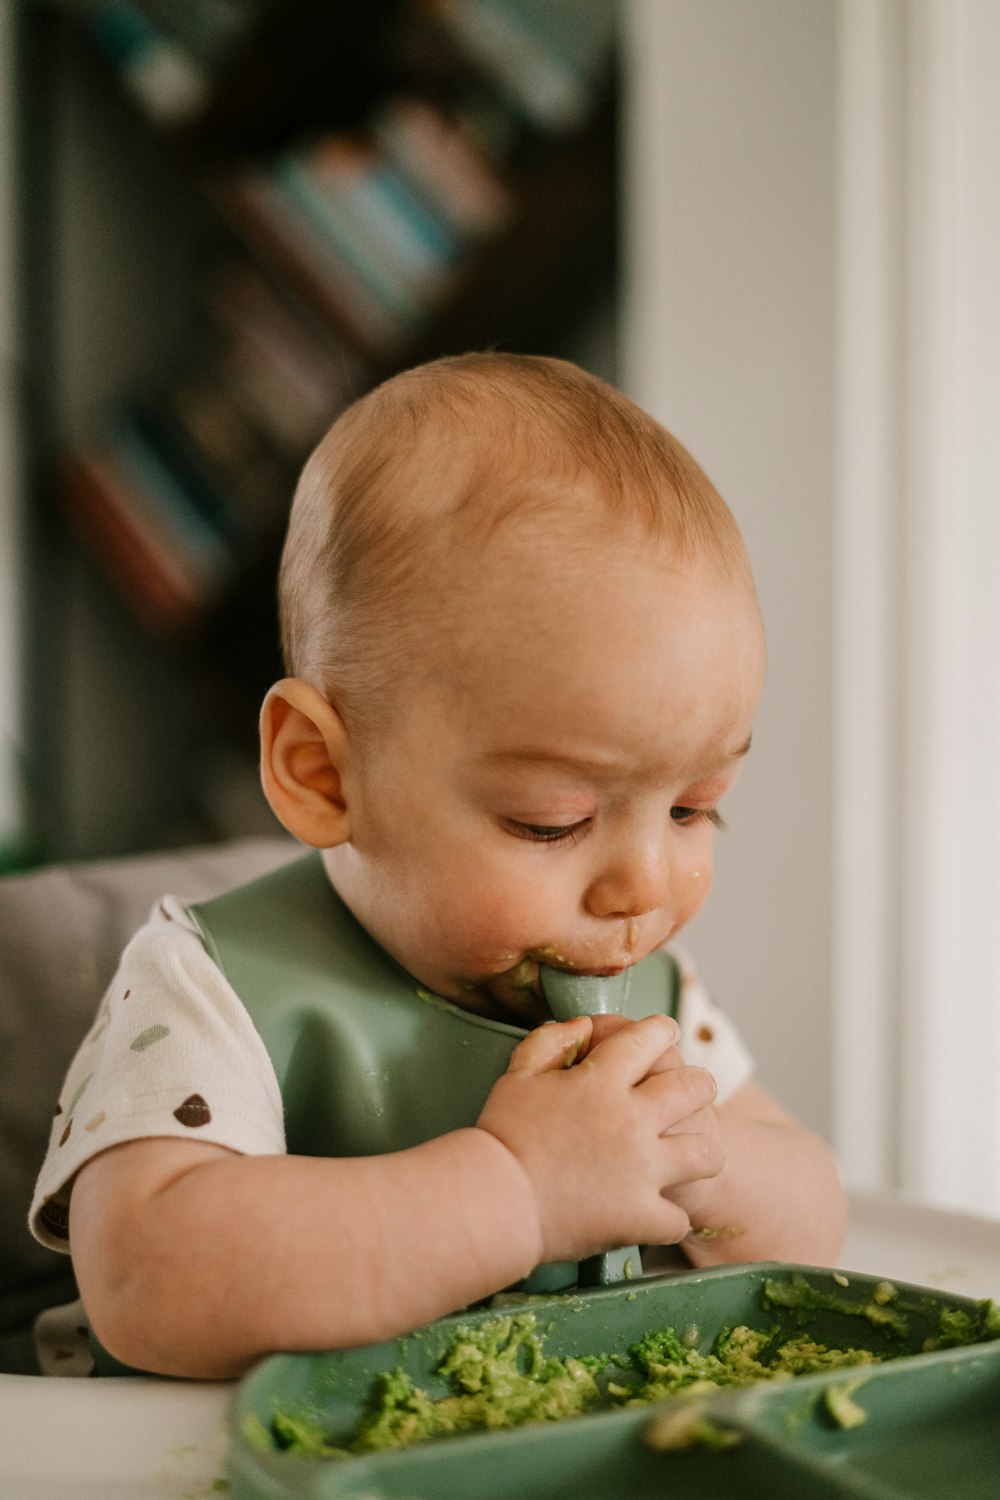 a baby eating broccoli